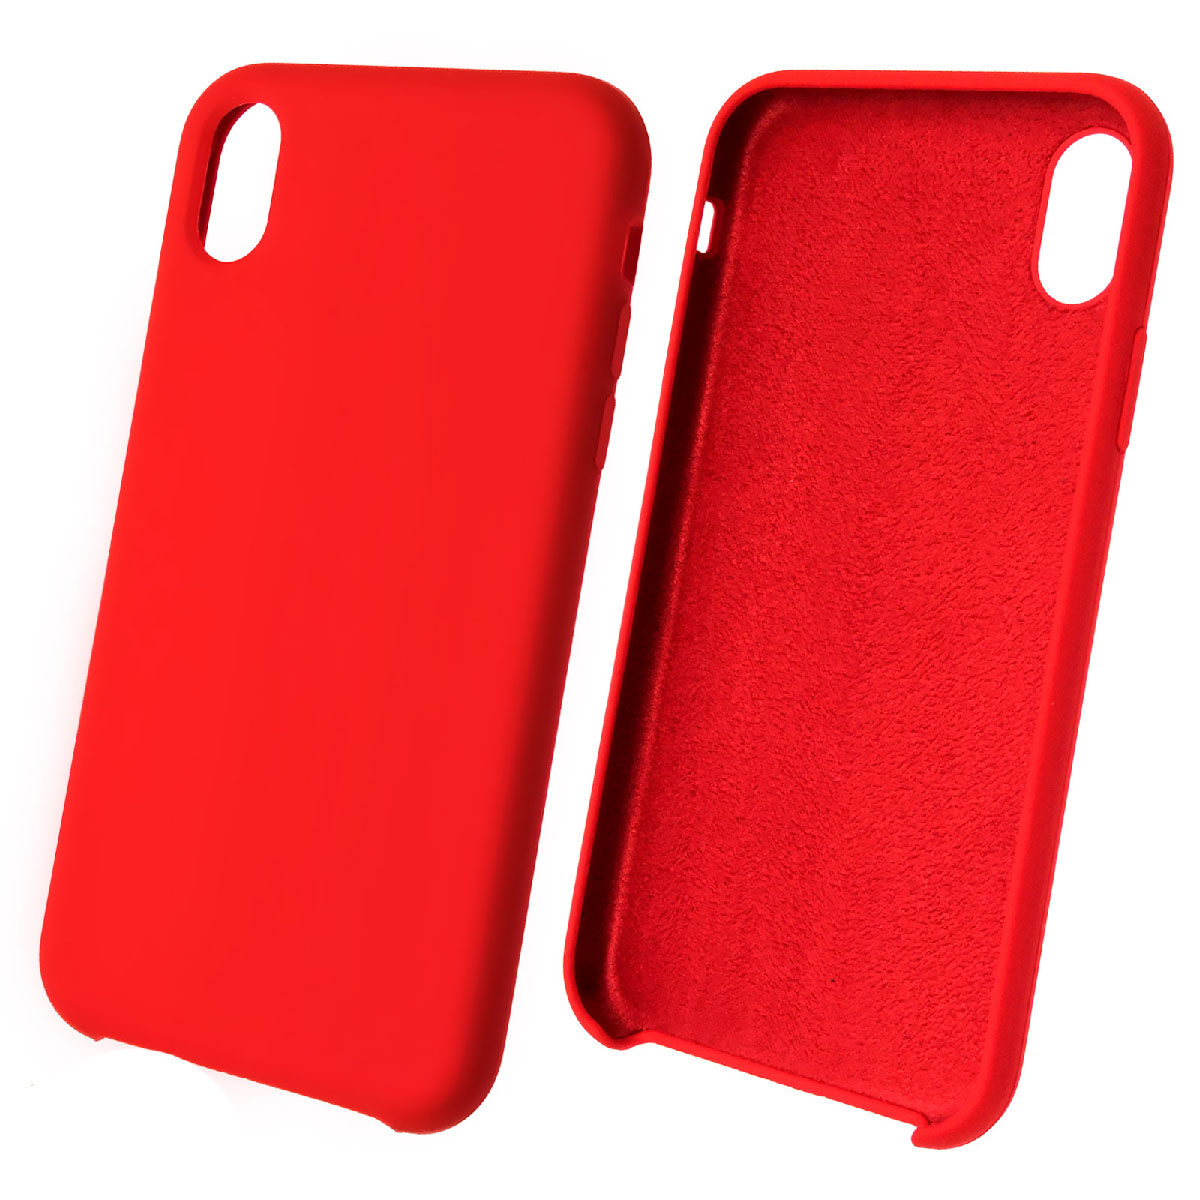 Чехол накладка Silicon Case для APPLE iPhone XR, силикон, бархат, цвет красный.